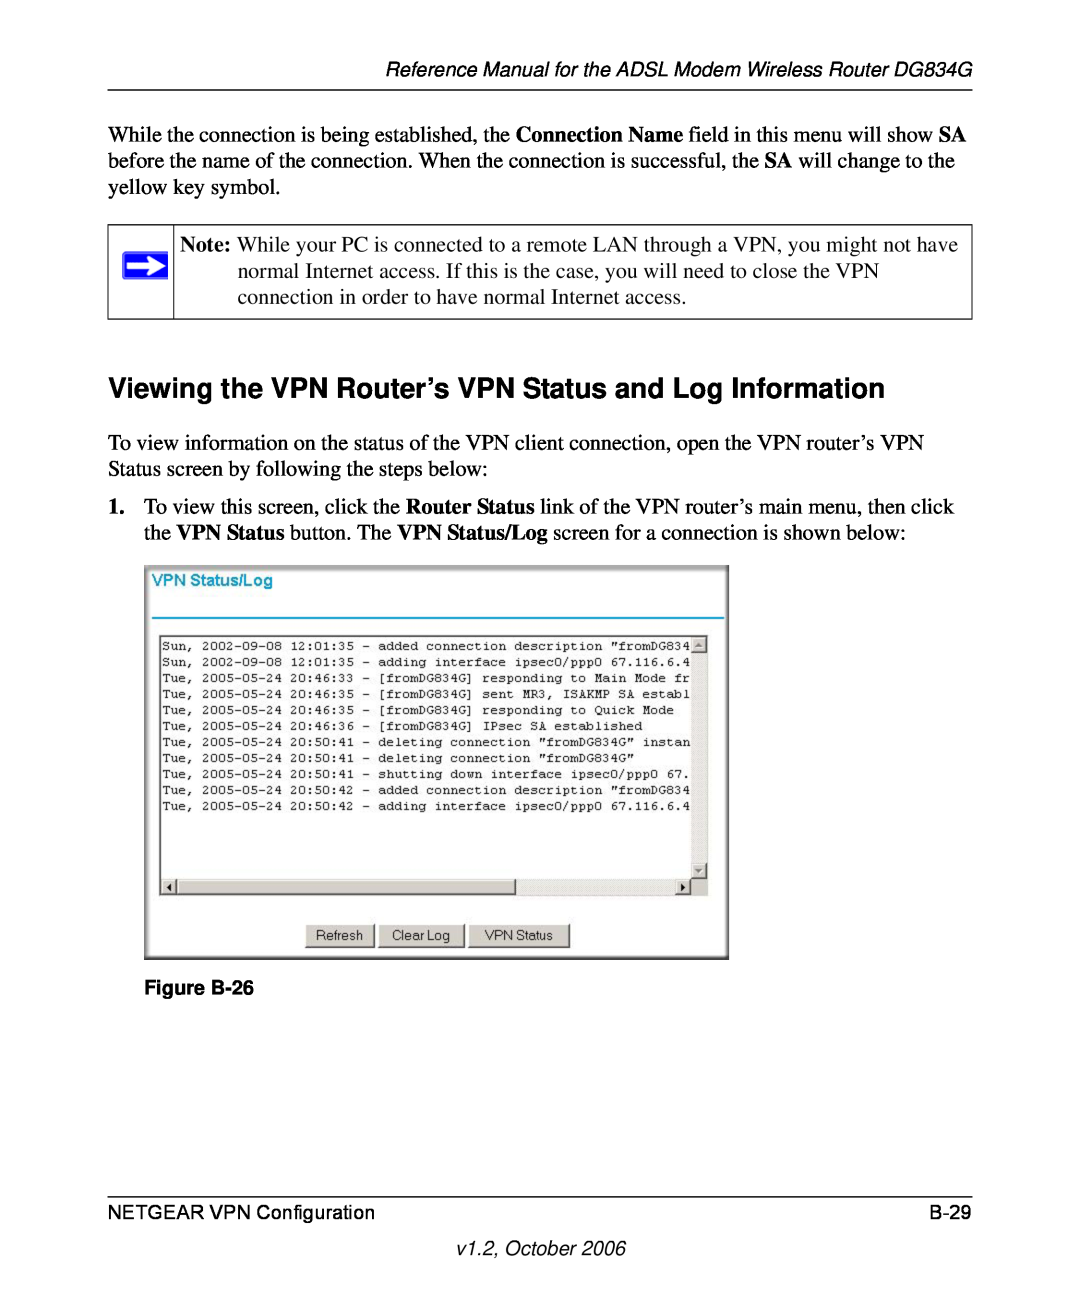 NETGEAR DG834G manual Viewing the VPN Router’s VPN Status and Log Information, Figure B-26 